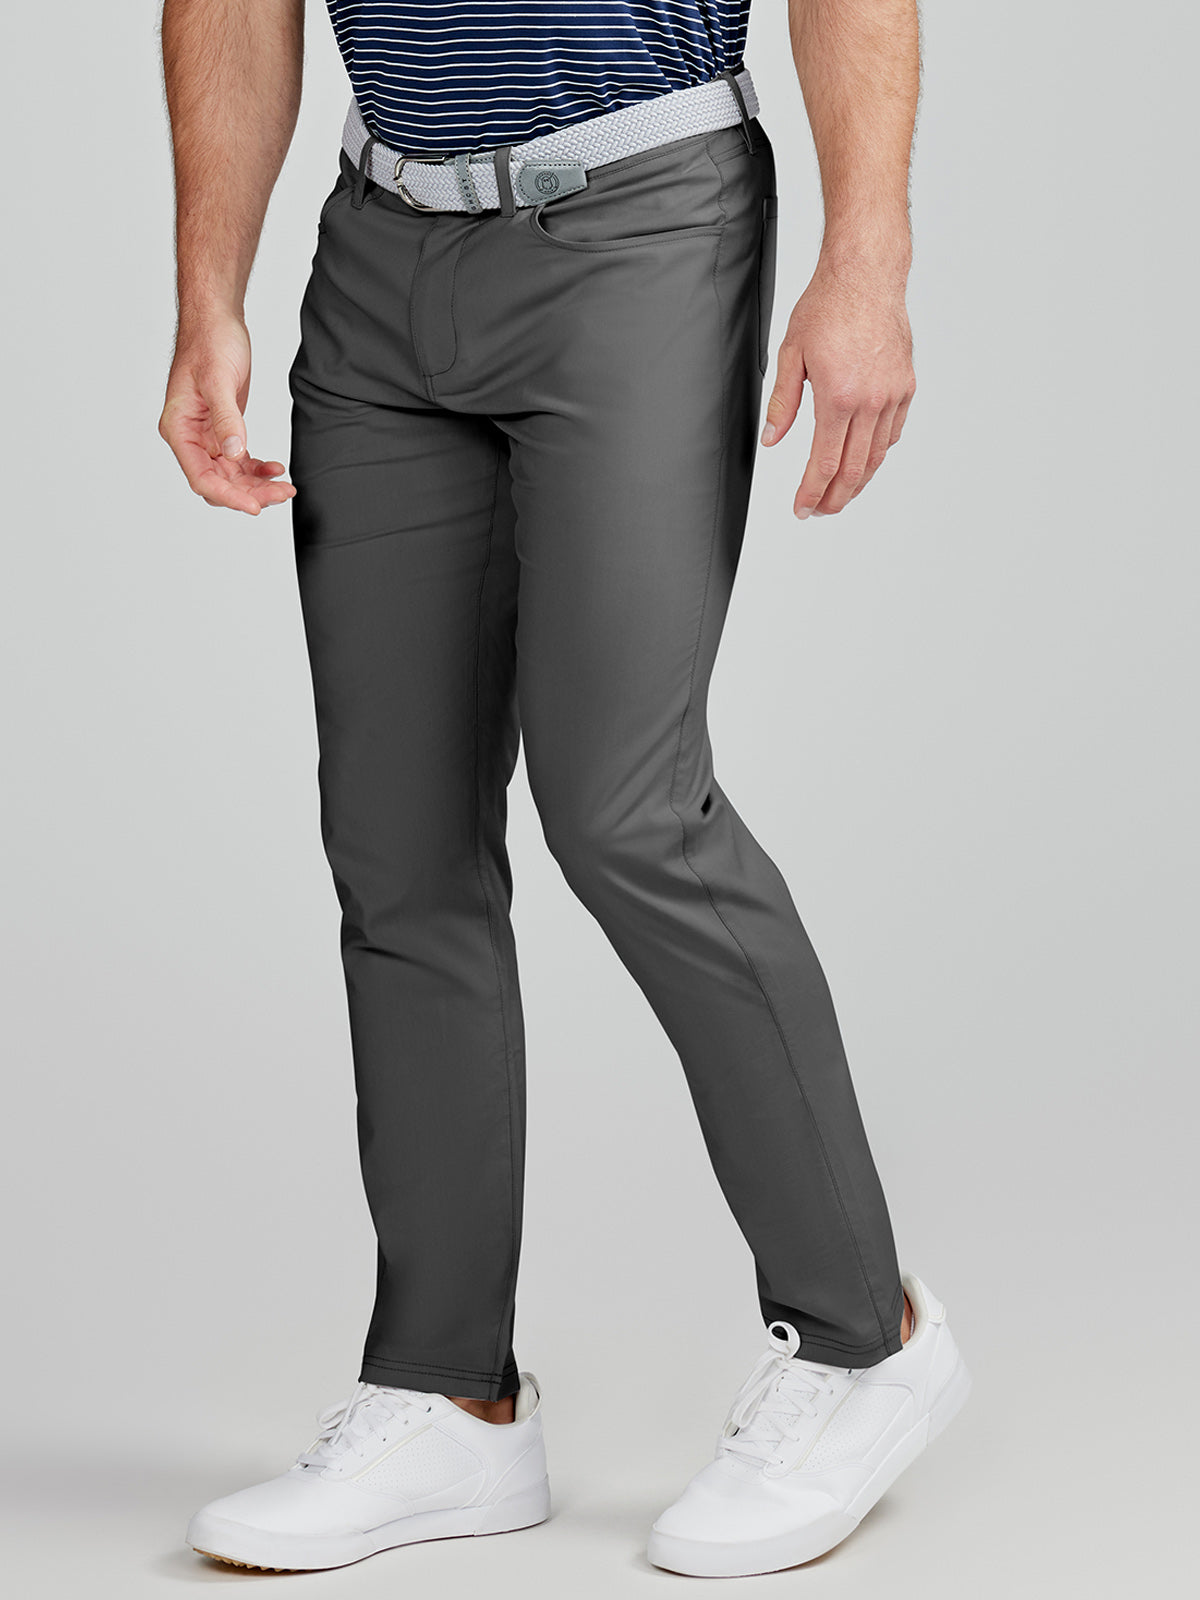 Under Armour Mens Sportswear Stretch Straight Leg Golf Pants Gray Size